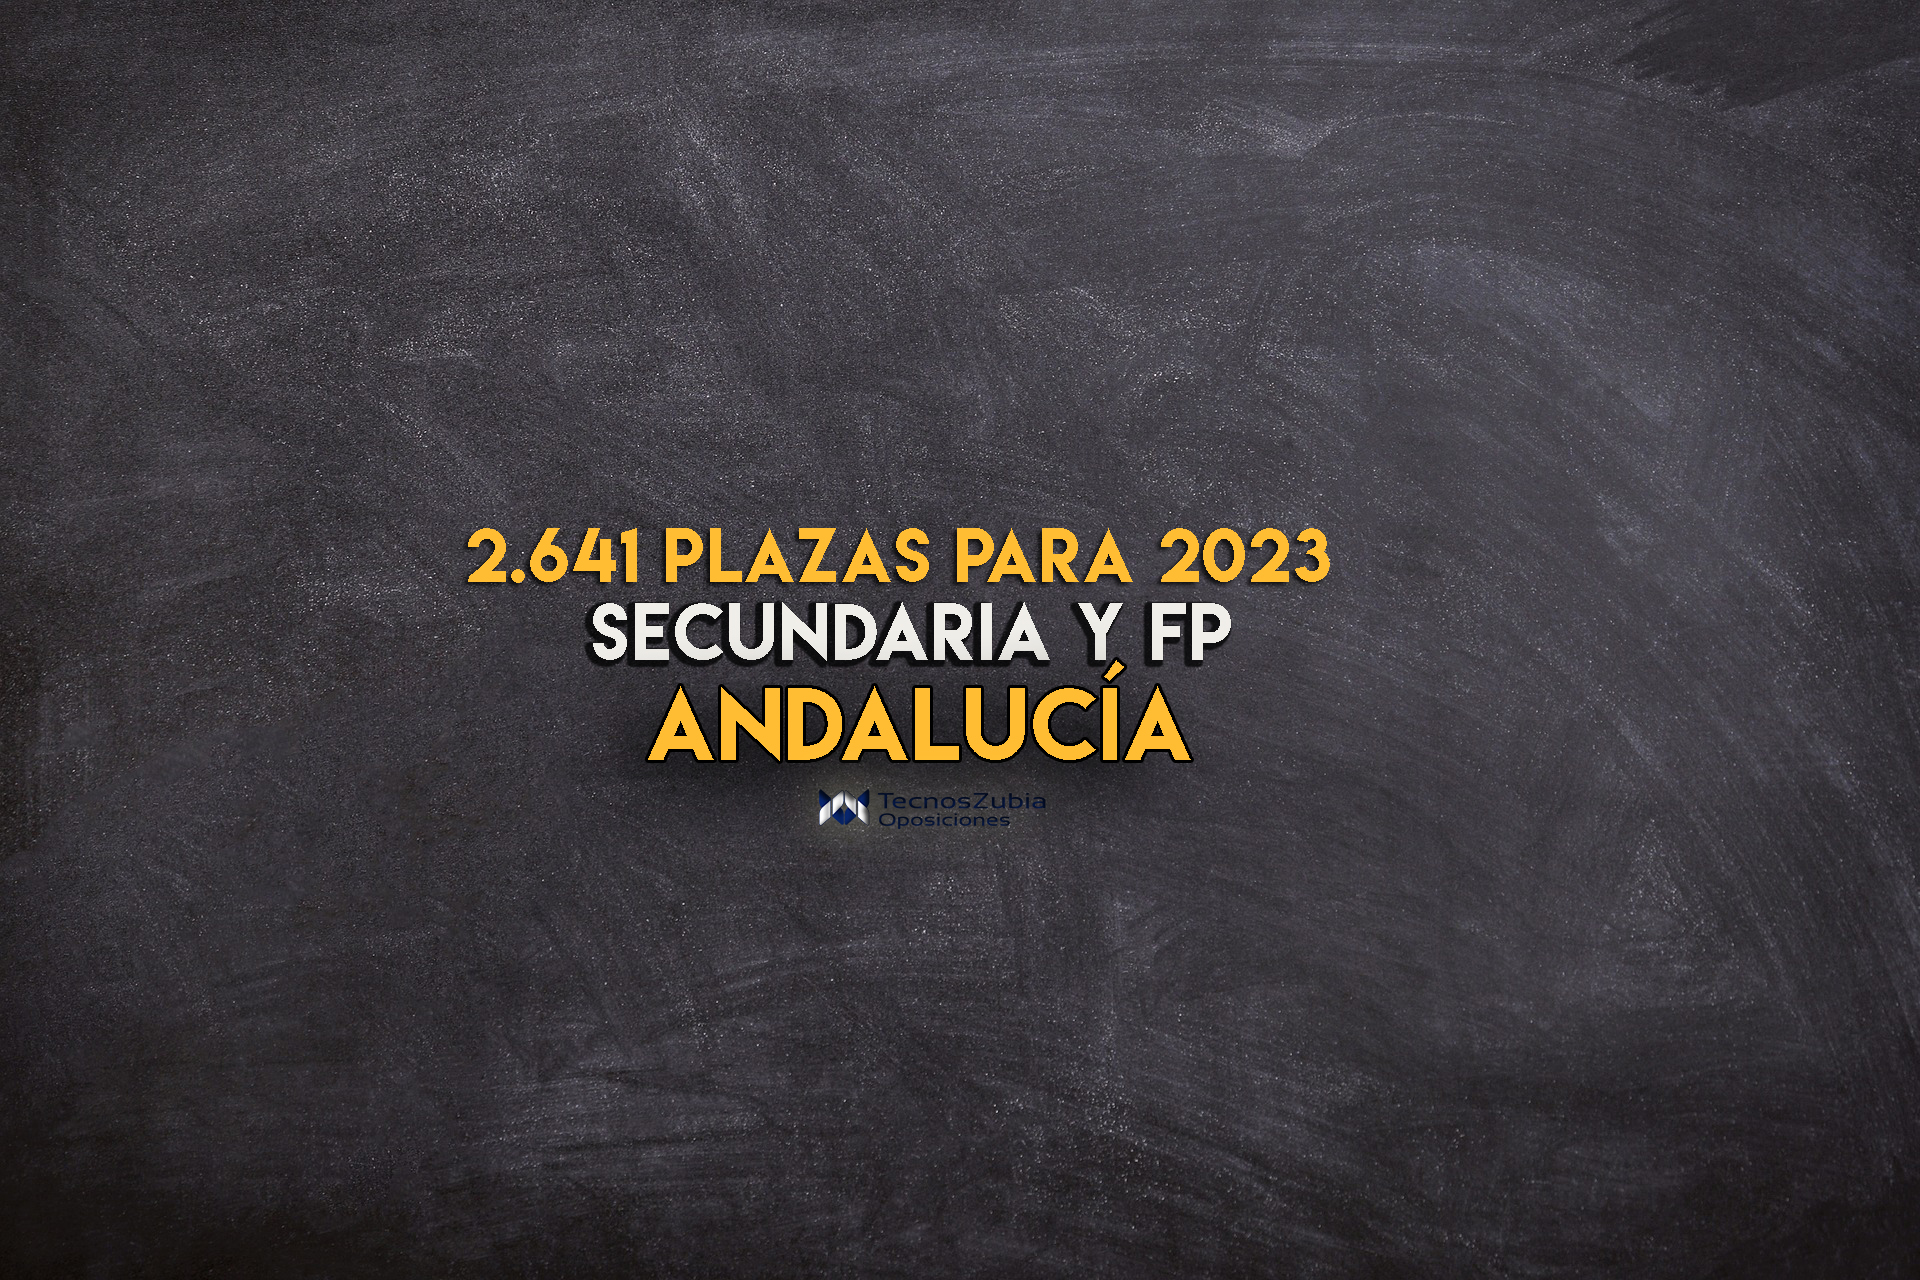 plazas 2023 andalucia secundaria y fp